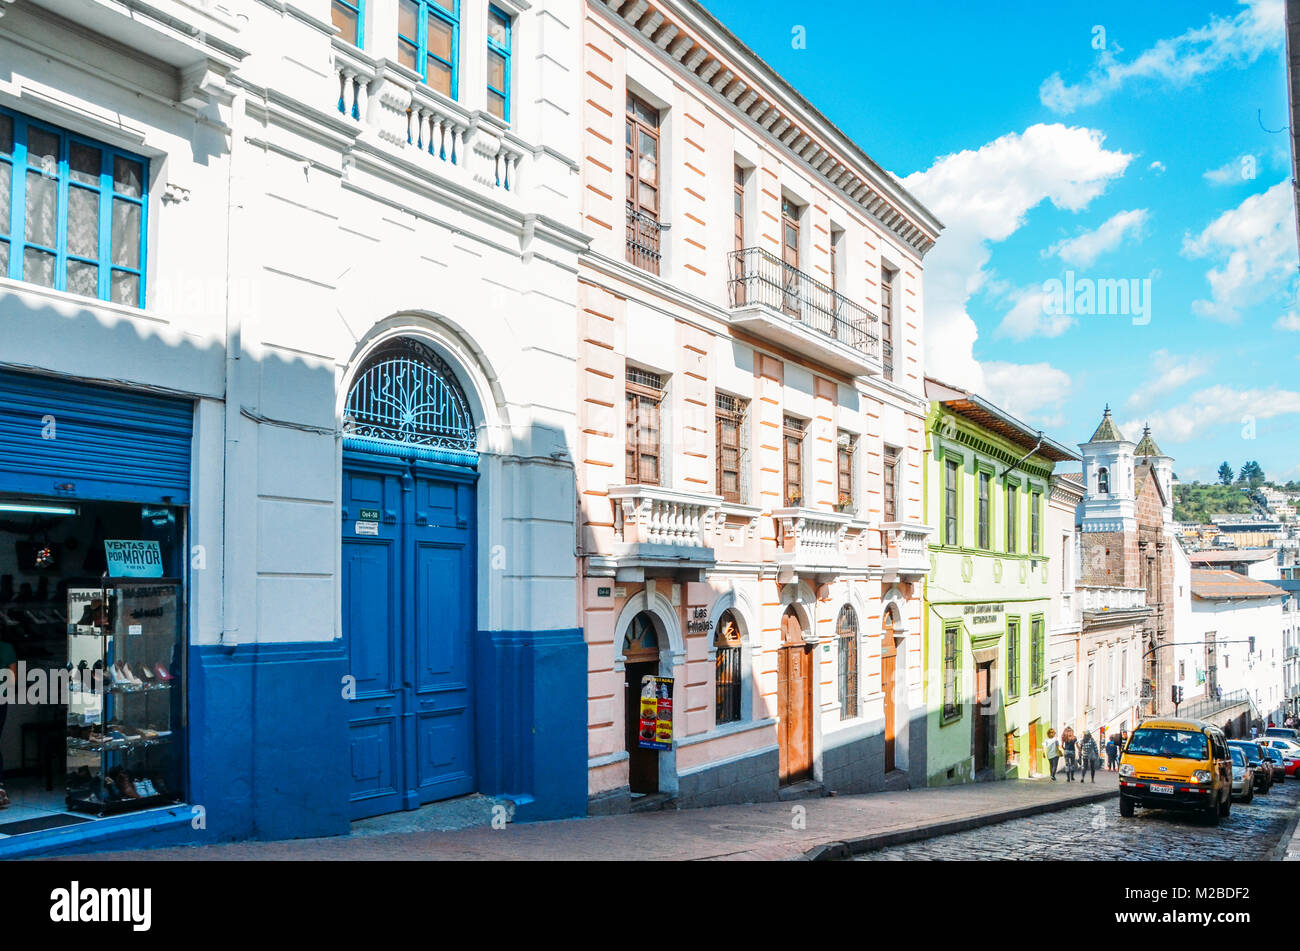 Quito, Ecuador, December 17, 2017: Colonial style architecture in the historic centre of Quito, Ecuador Stock Photo